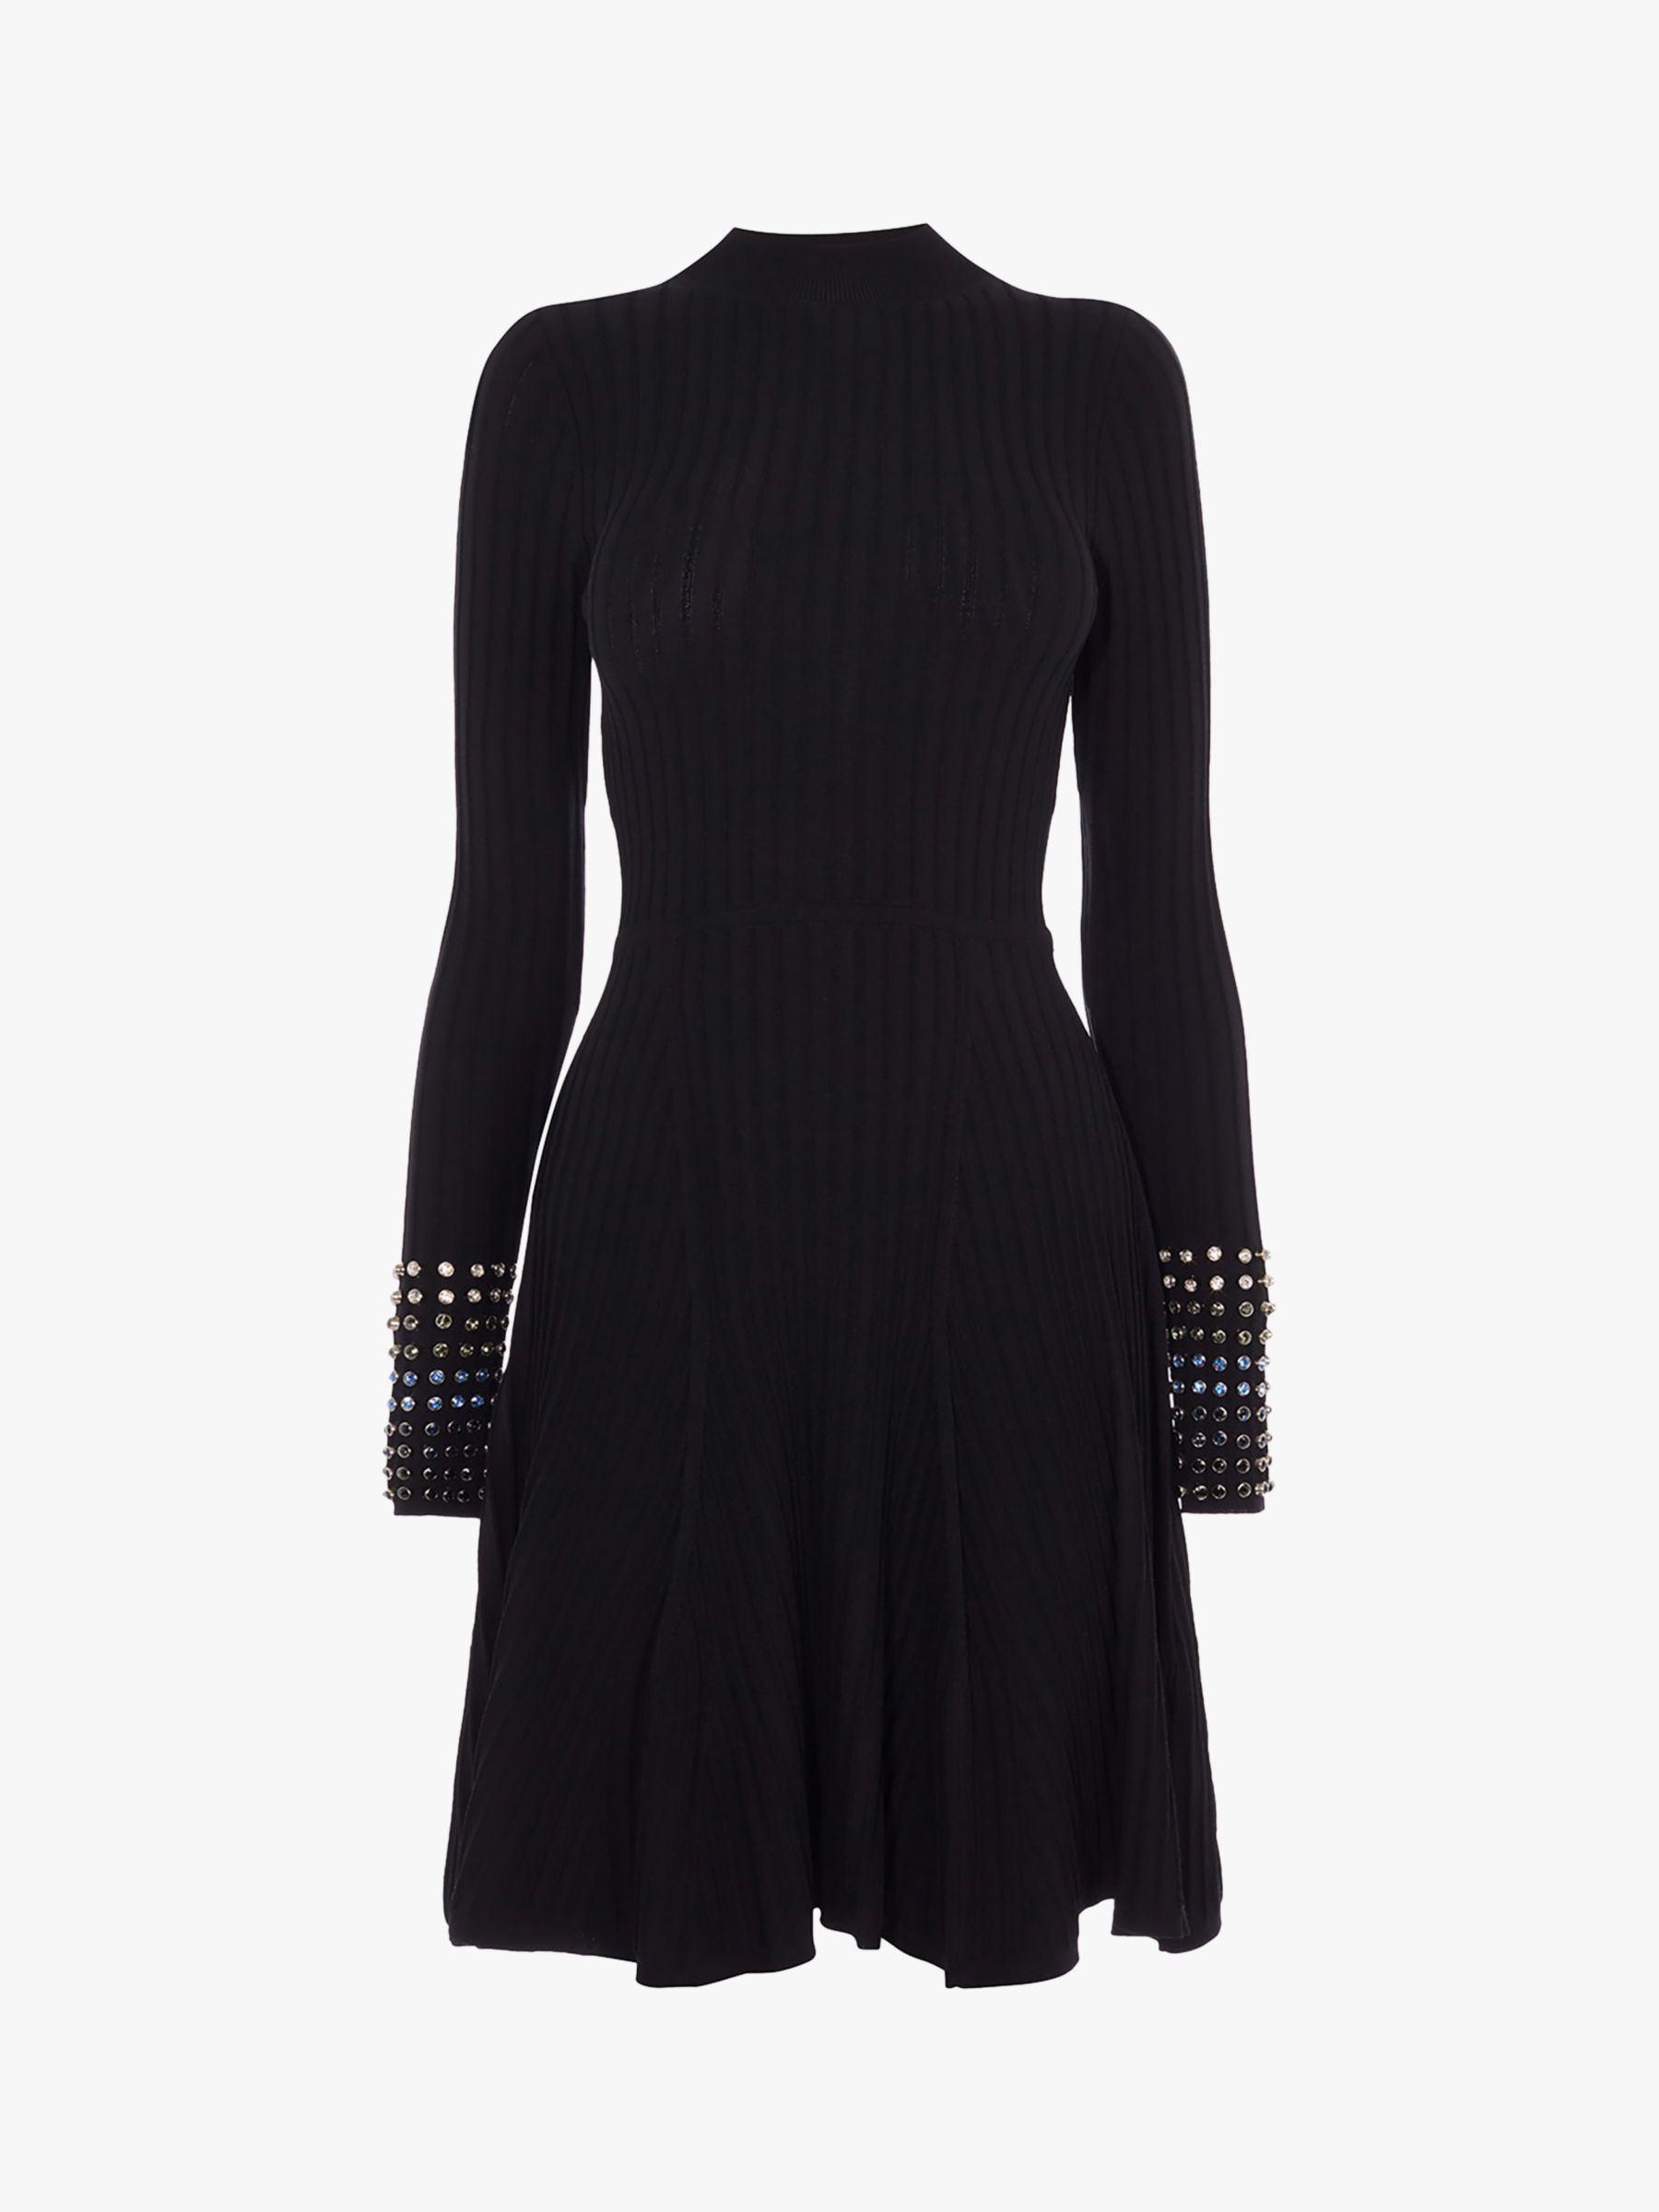 Karen Millen Embellished Cuff Dress, Black